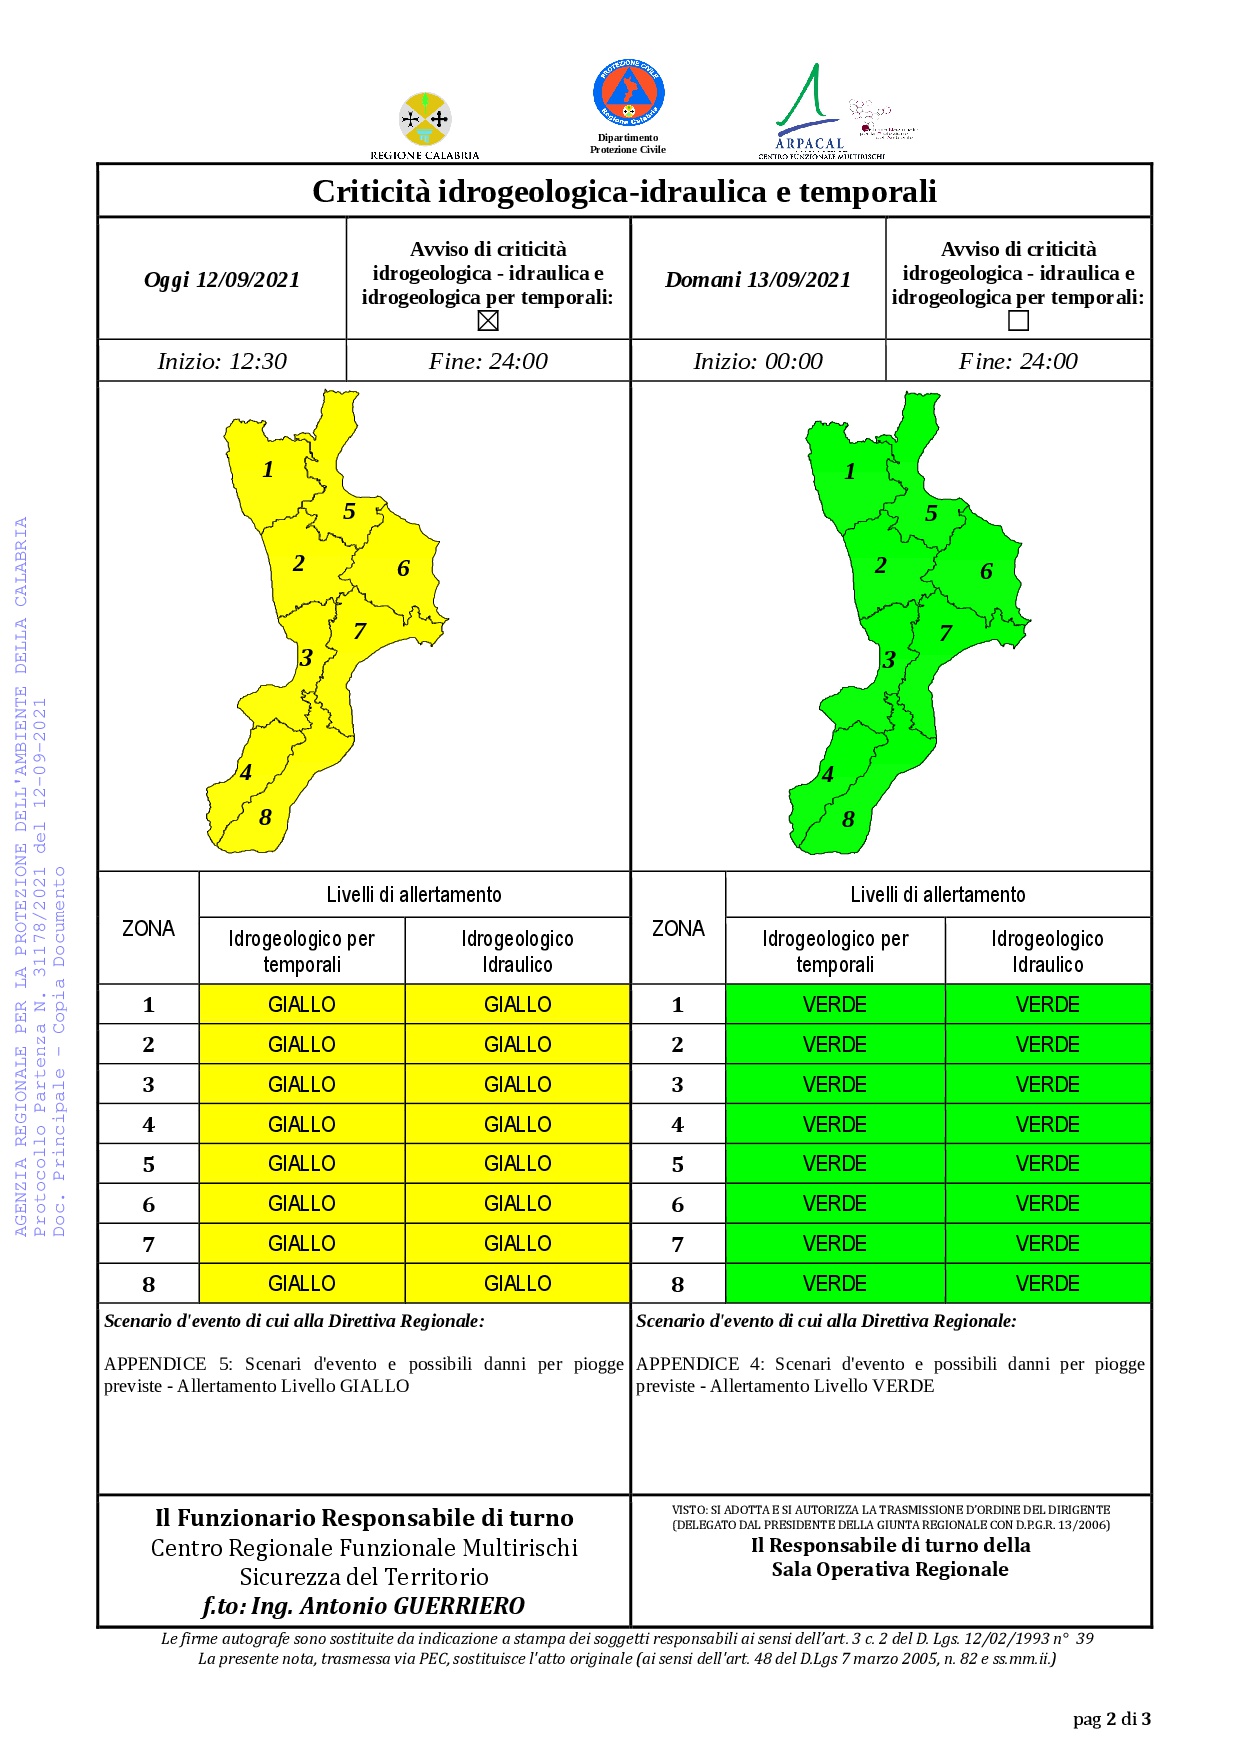 Criticità idrogeologica-idraulica e temporali in Calabria 12-09-2021